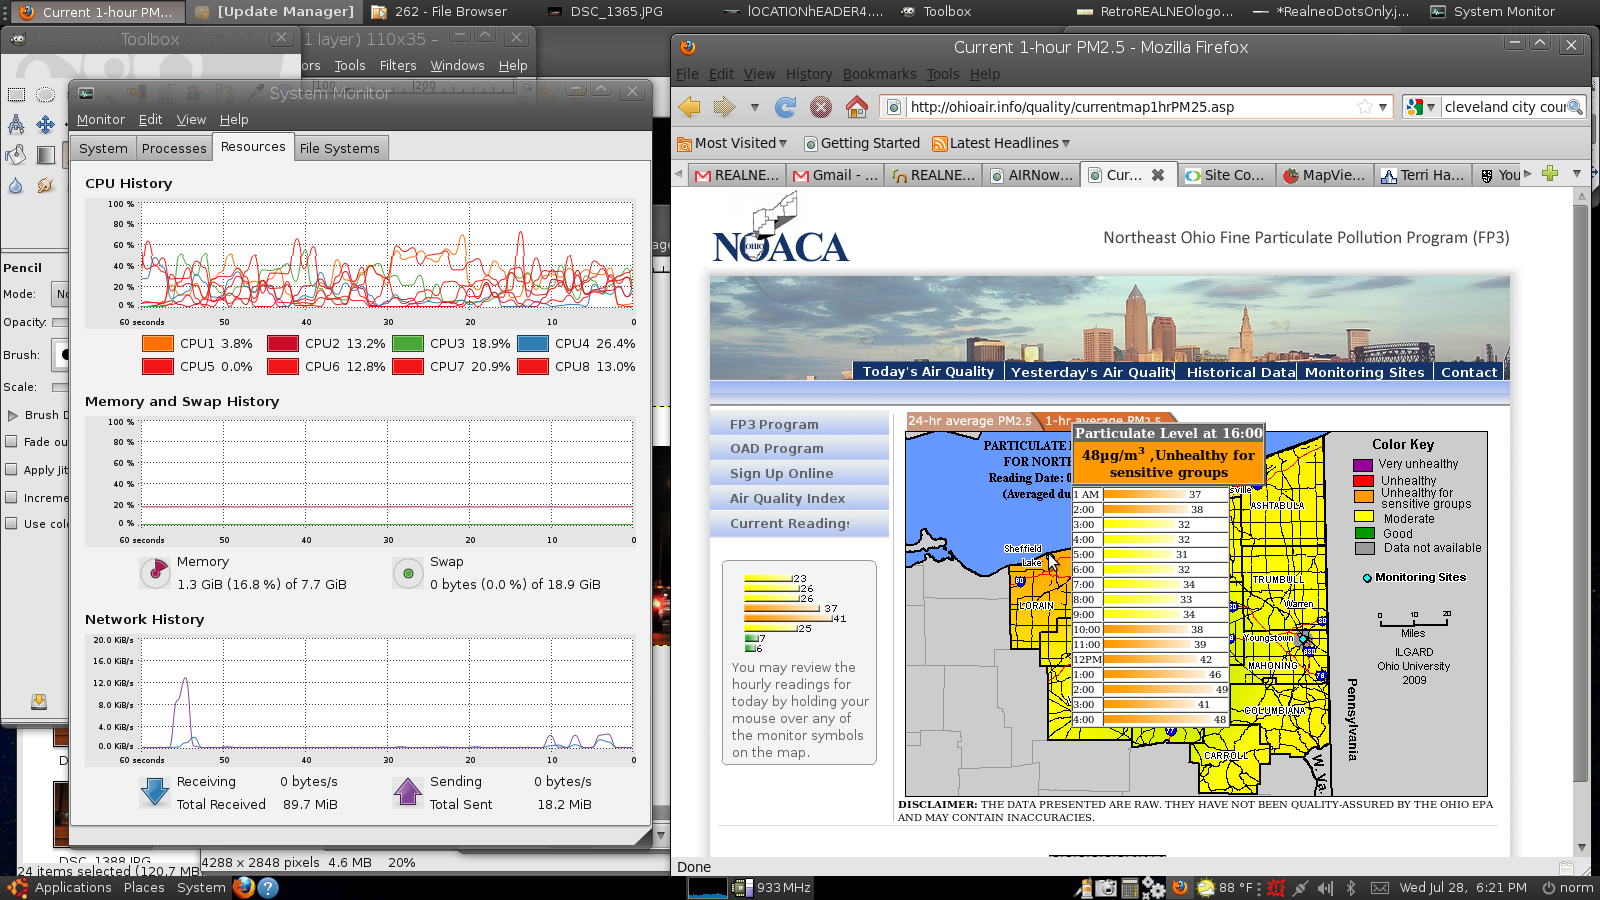 NOACA EPA Air Quality Monitoring for Sheffield Lake, Ohio - UNSAFE